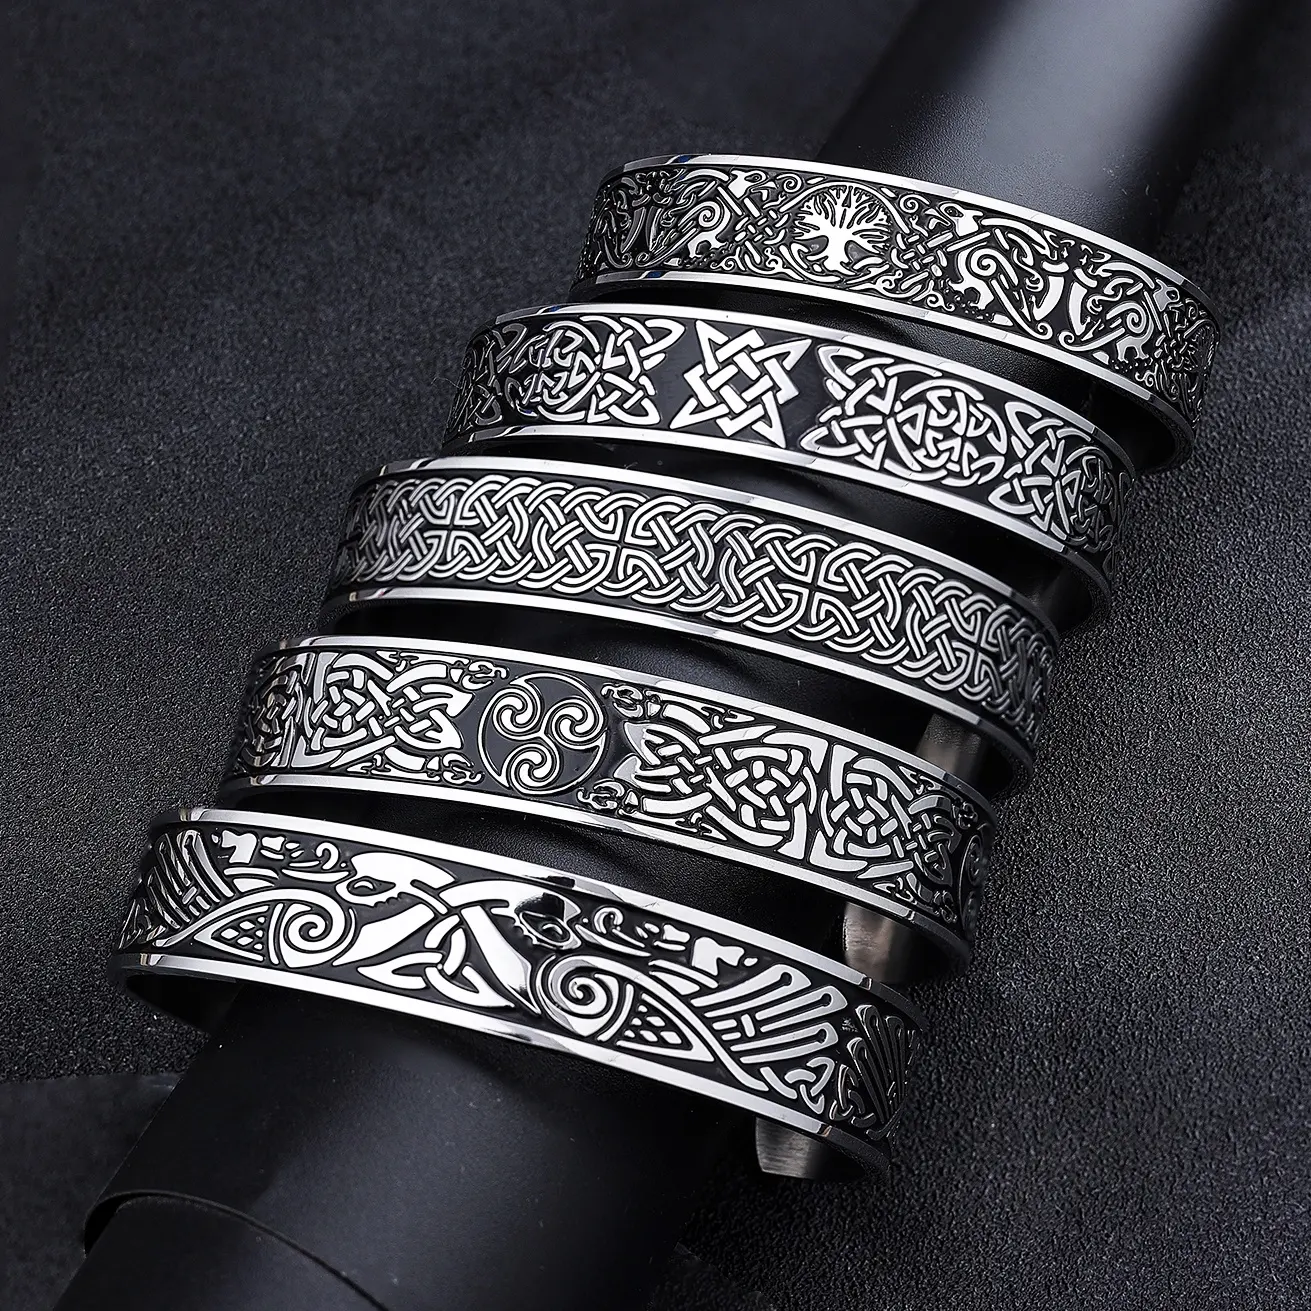 Joyería nórdica vikinga personalizada, anillos vikingos de acero inoxidable 316 con apertura ancha, brazalete con nudos celtas runas